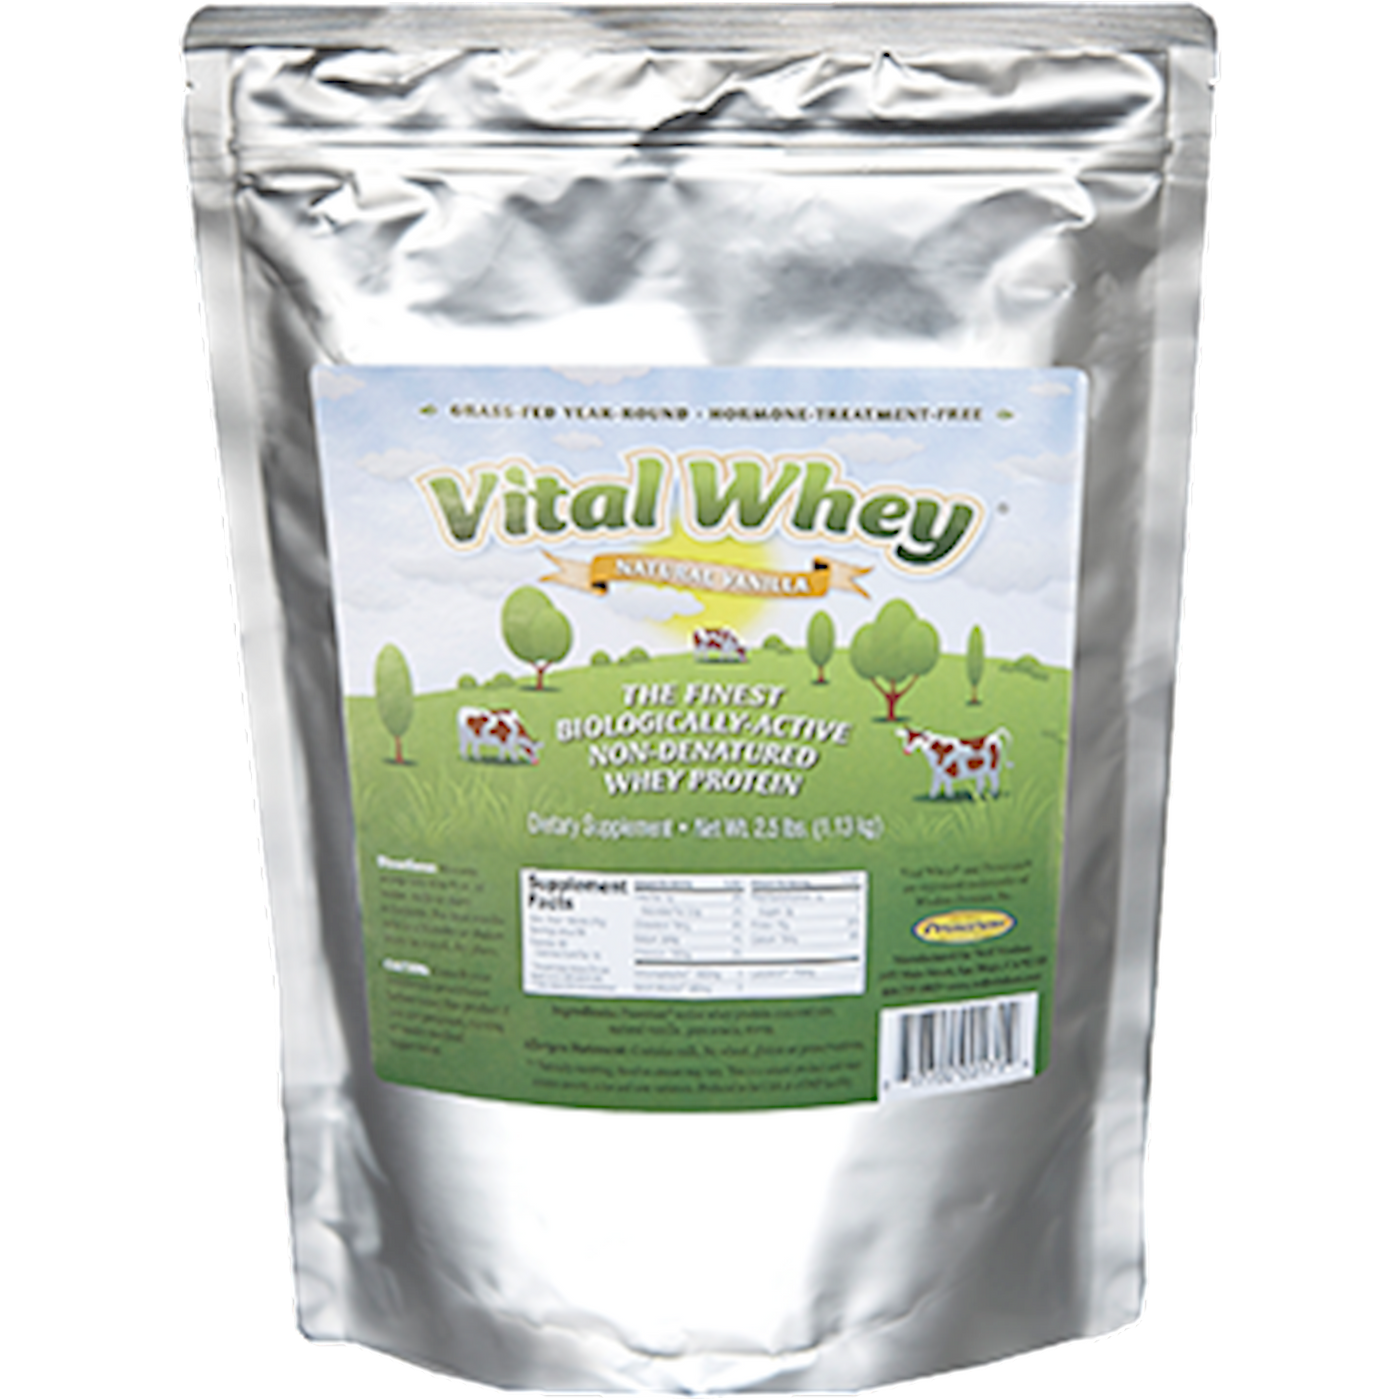 Vital Whey Natural Vanilla ings Curated Wellness